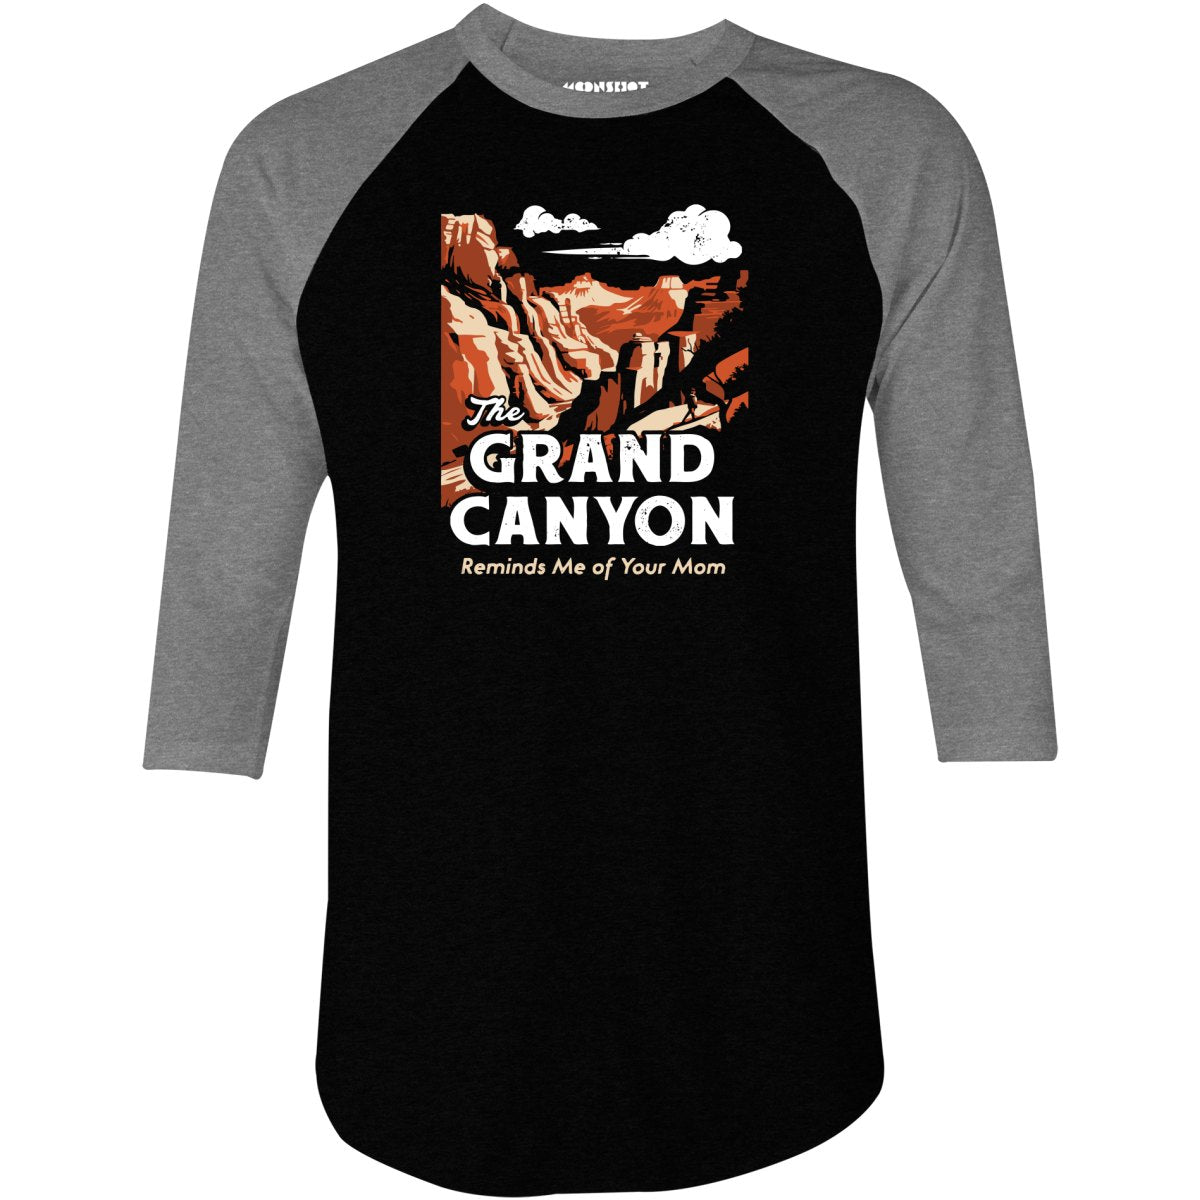 Grand Canyon - 3/4 Sleeve Raglan T-Shirt